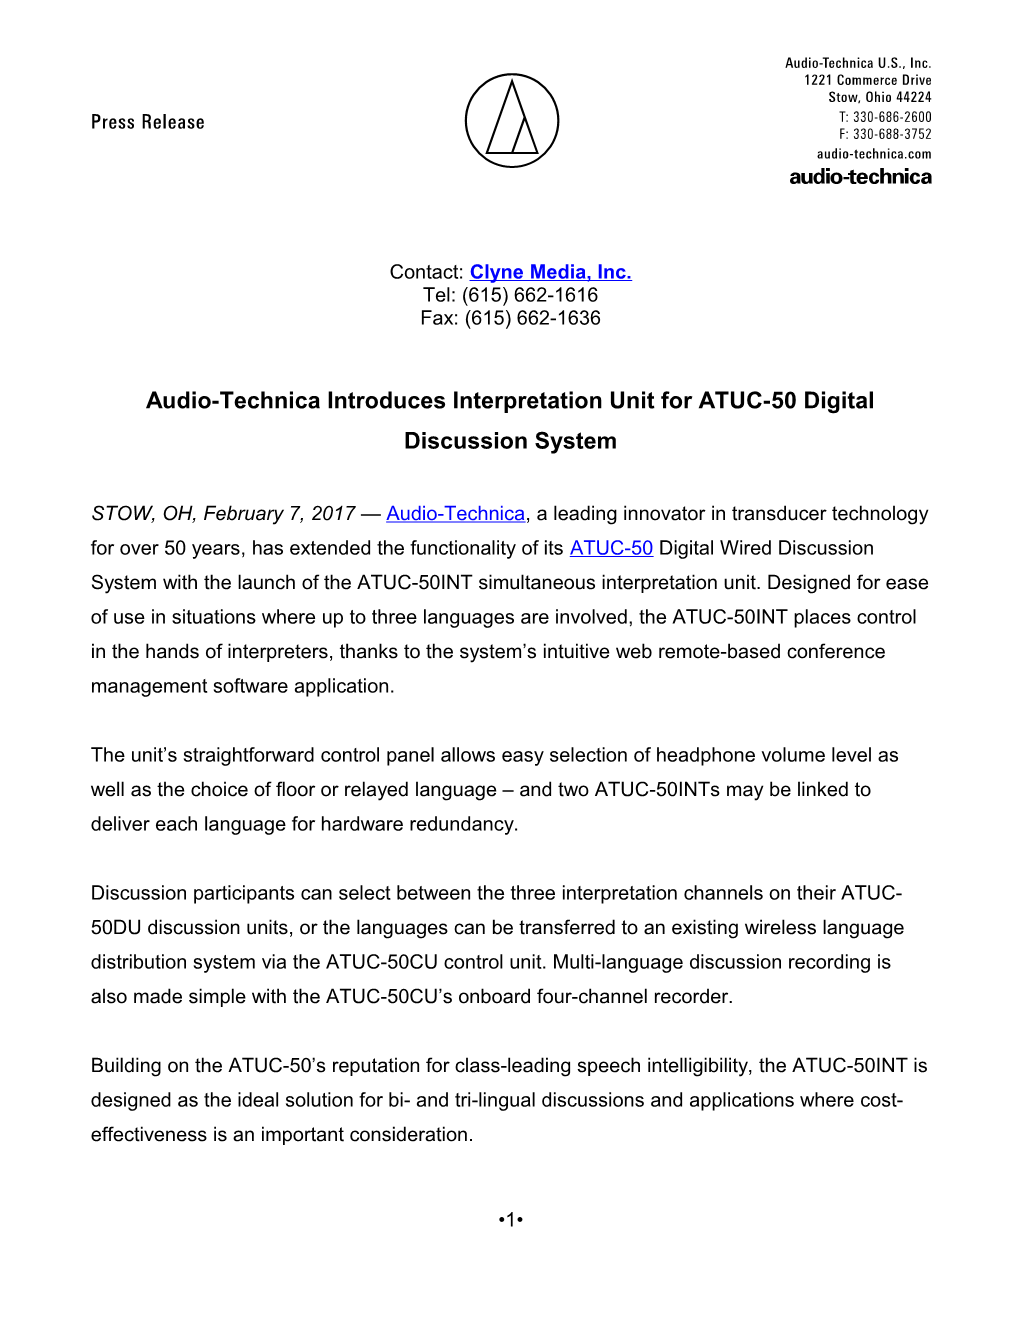 Audio-Technica Introduces Interpretation Unit for ATUC-50 Digital Discussion System